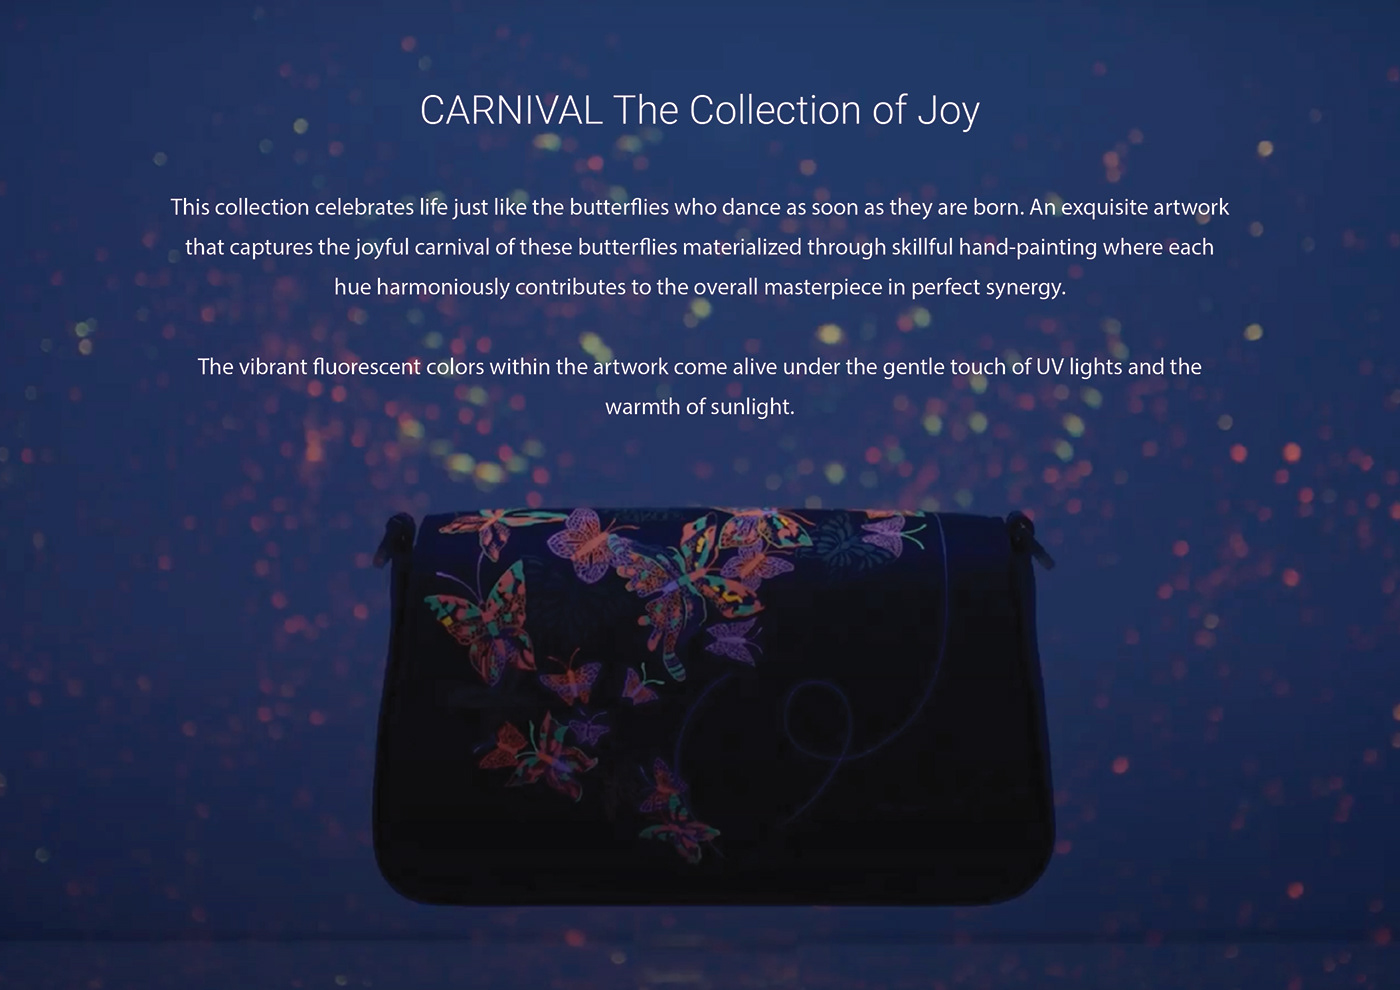 Fun vibrant handbag glow in the dark neon joyful colorful artwork artistic glowing